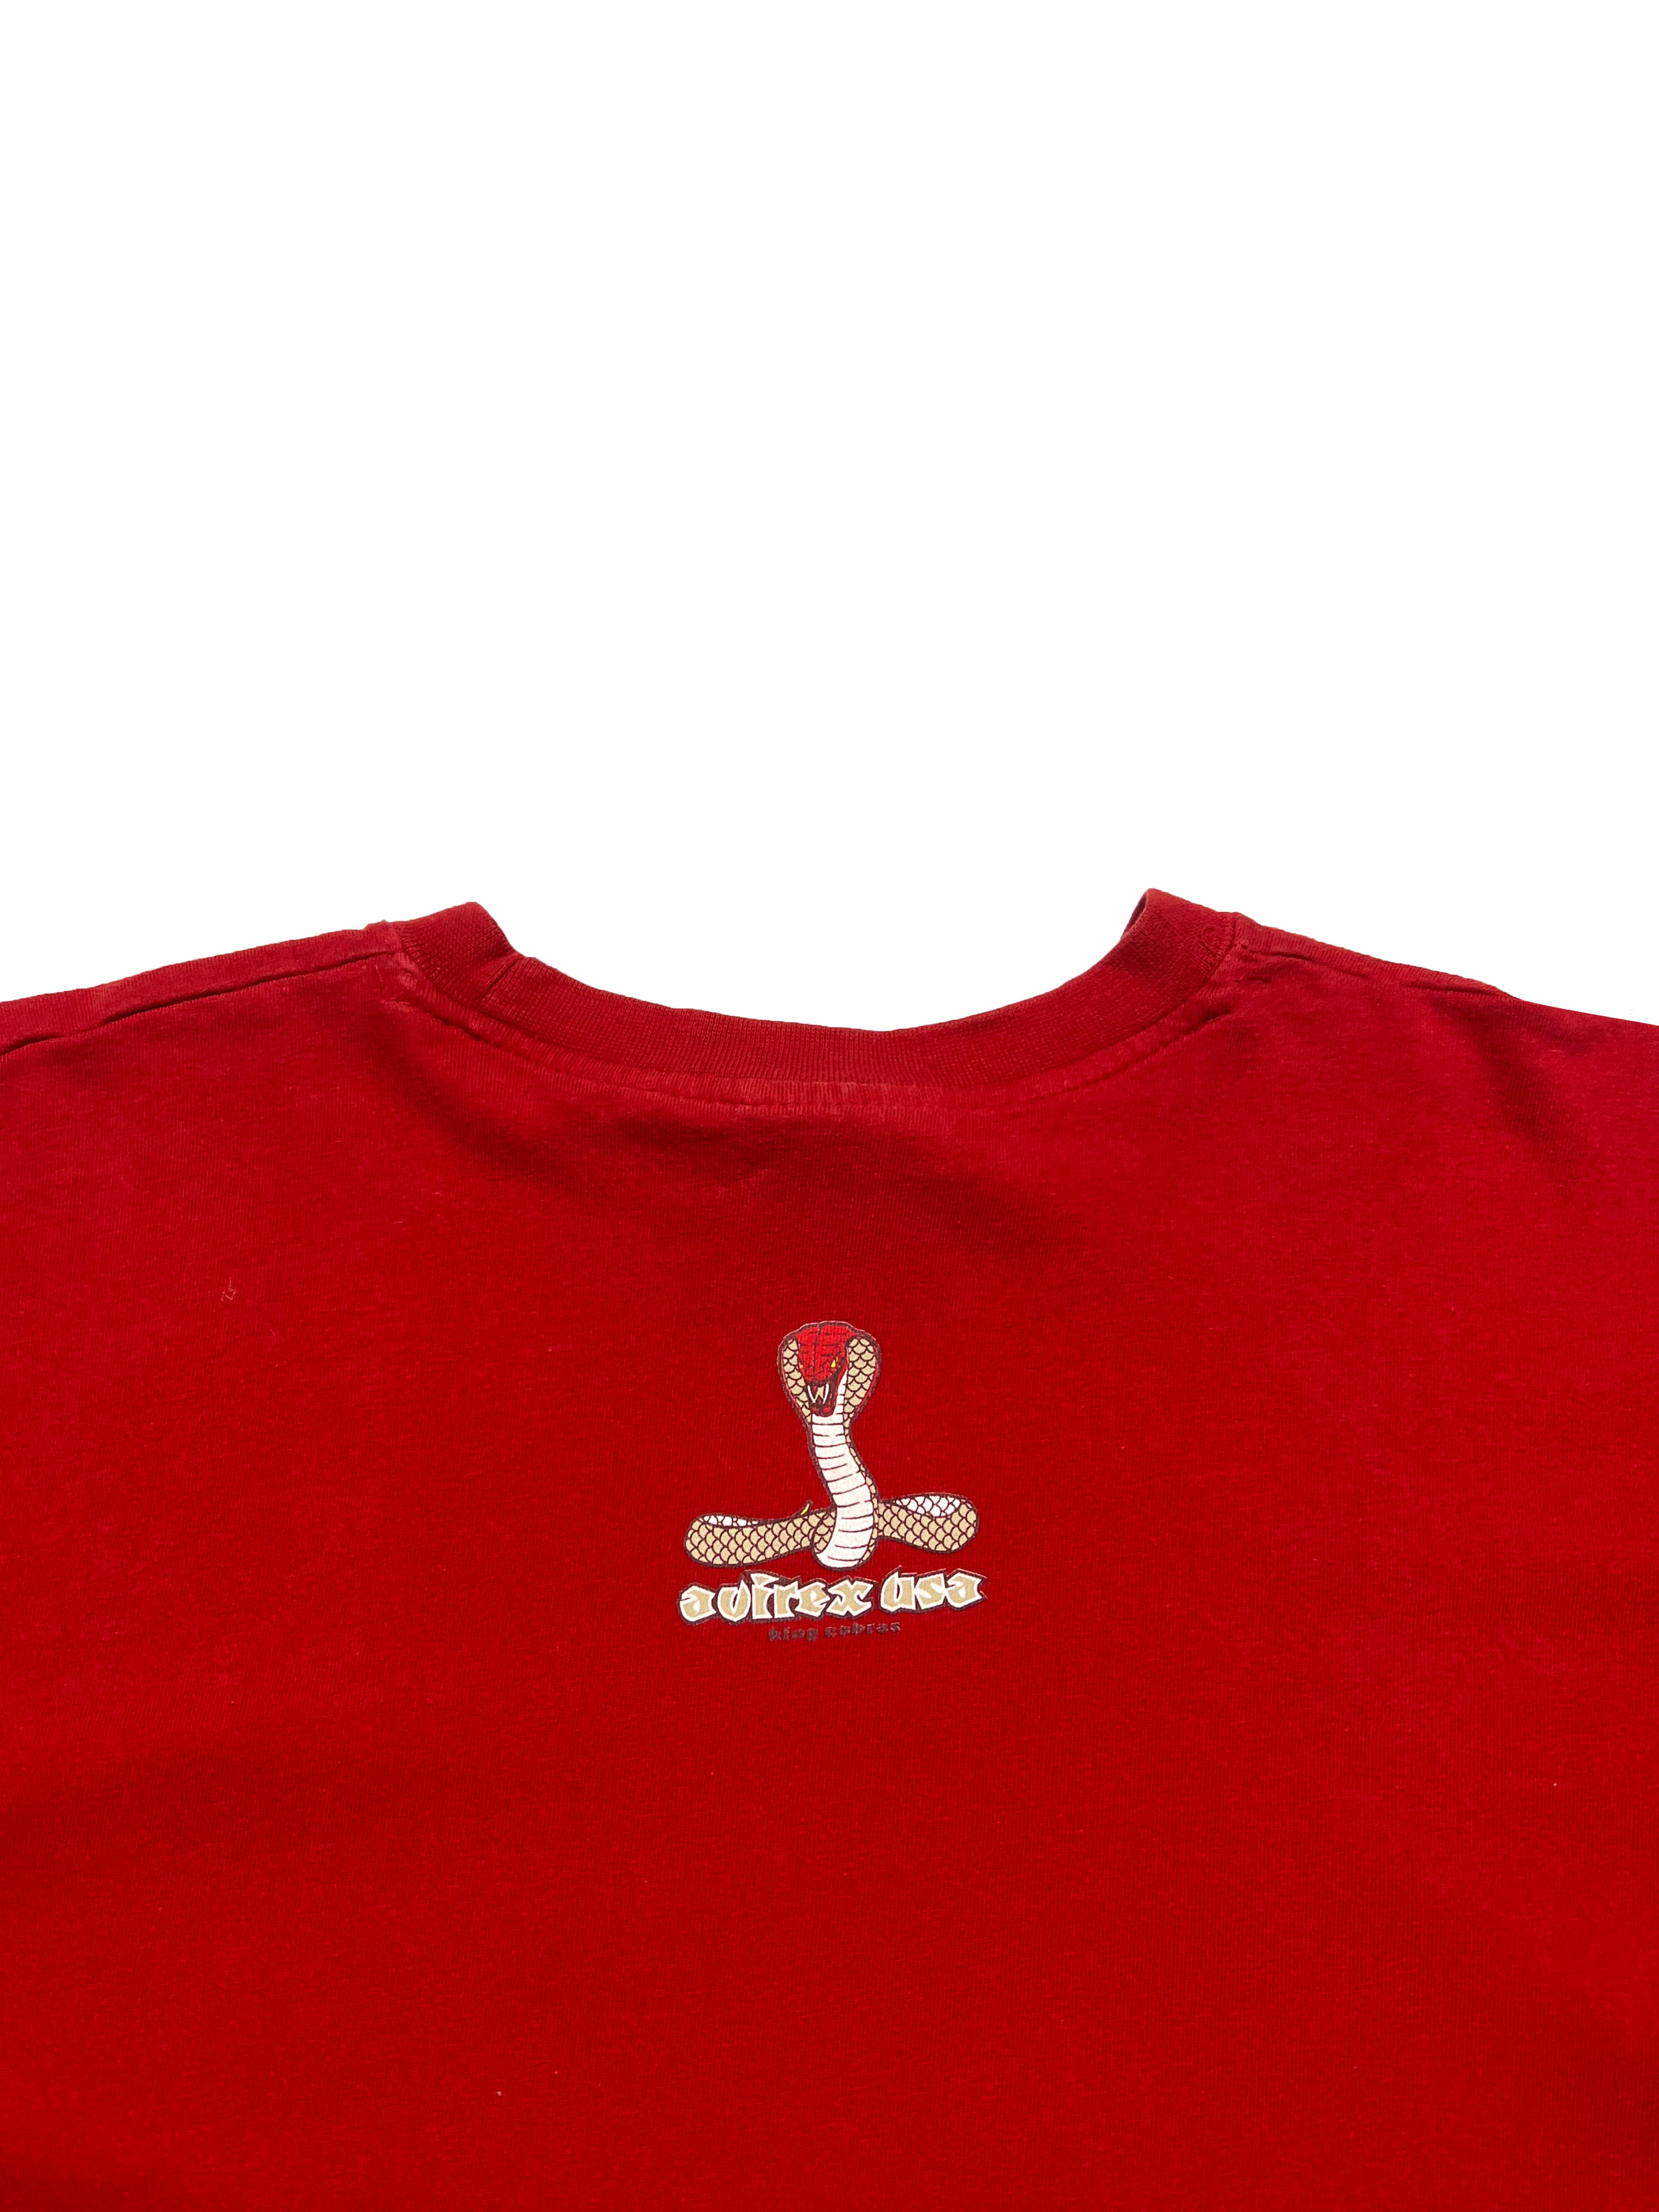 Avirex 'King Cobra' Red T-shirt 90's